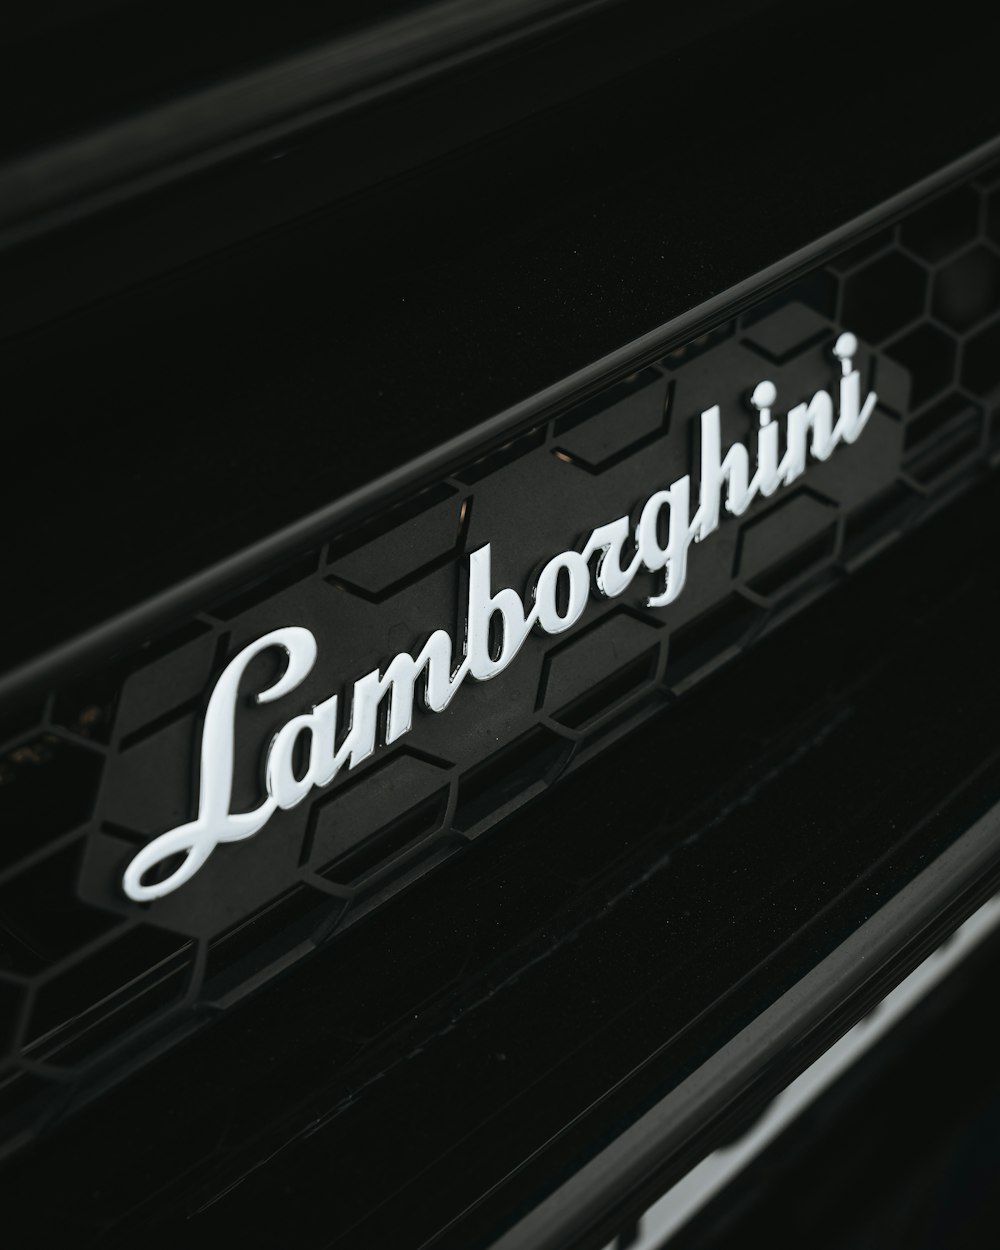 a close up of the lambino logo on a car